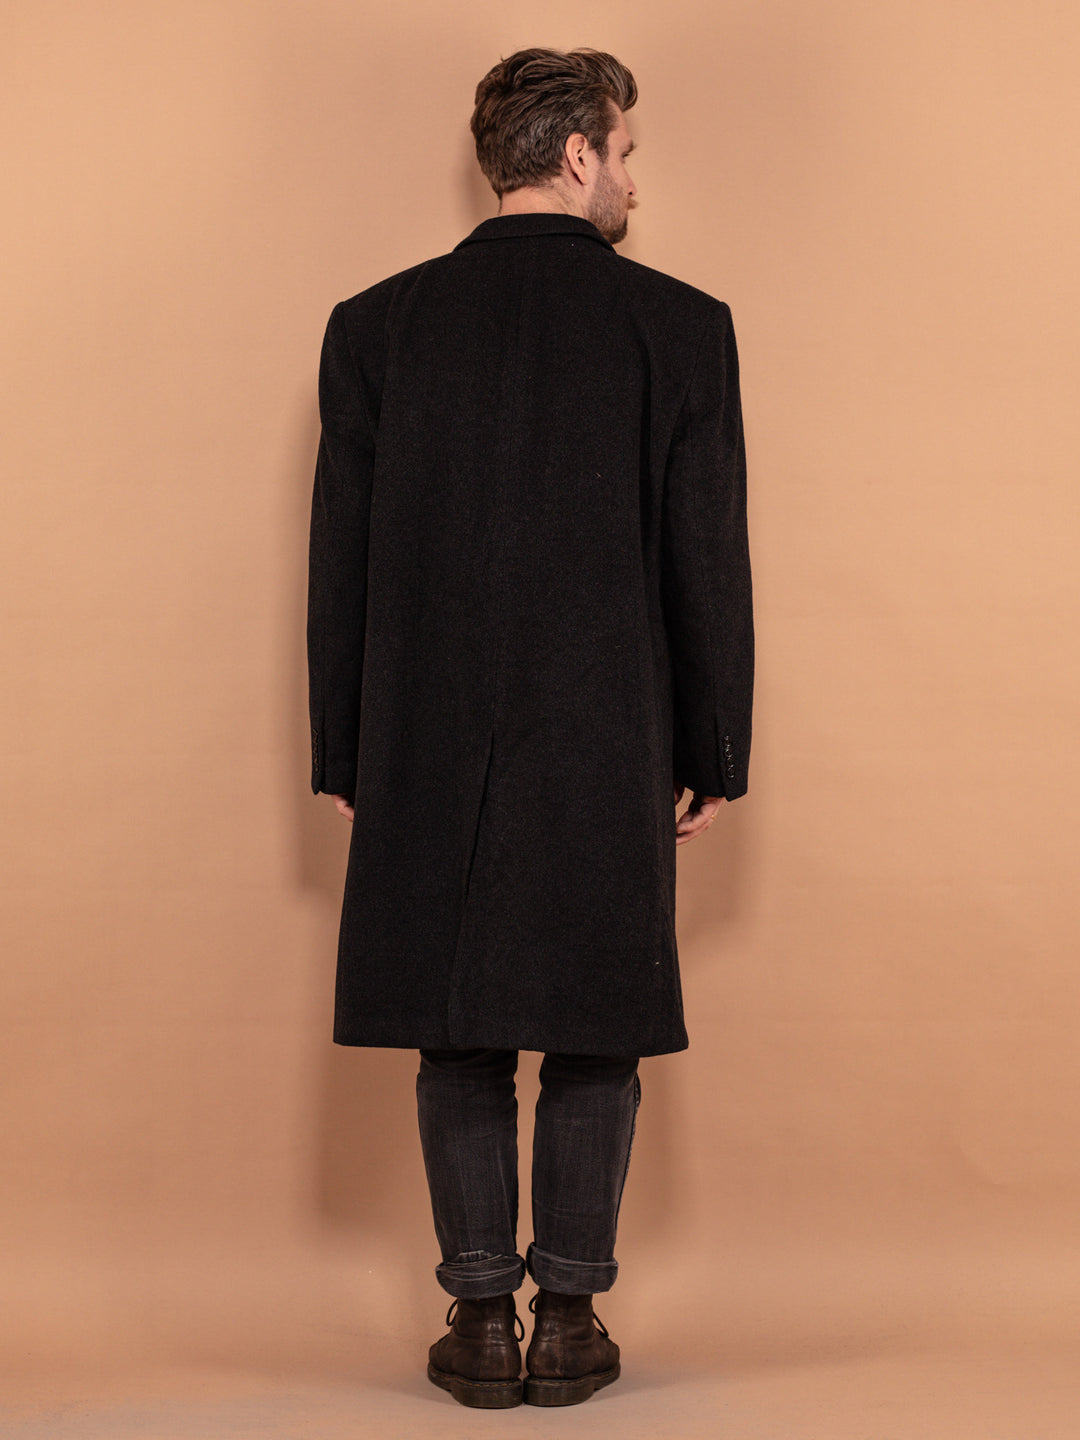 Wool and Cashmere Coat 00's, Size XL, Men Y2K Minimalist Overcoat, Dark Gray Wool Blend Coat, Classic Style Elegant Outerwear, Menswear